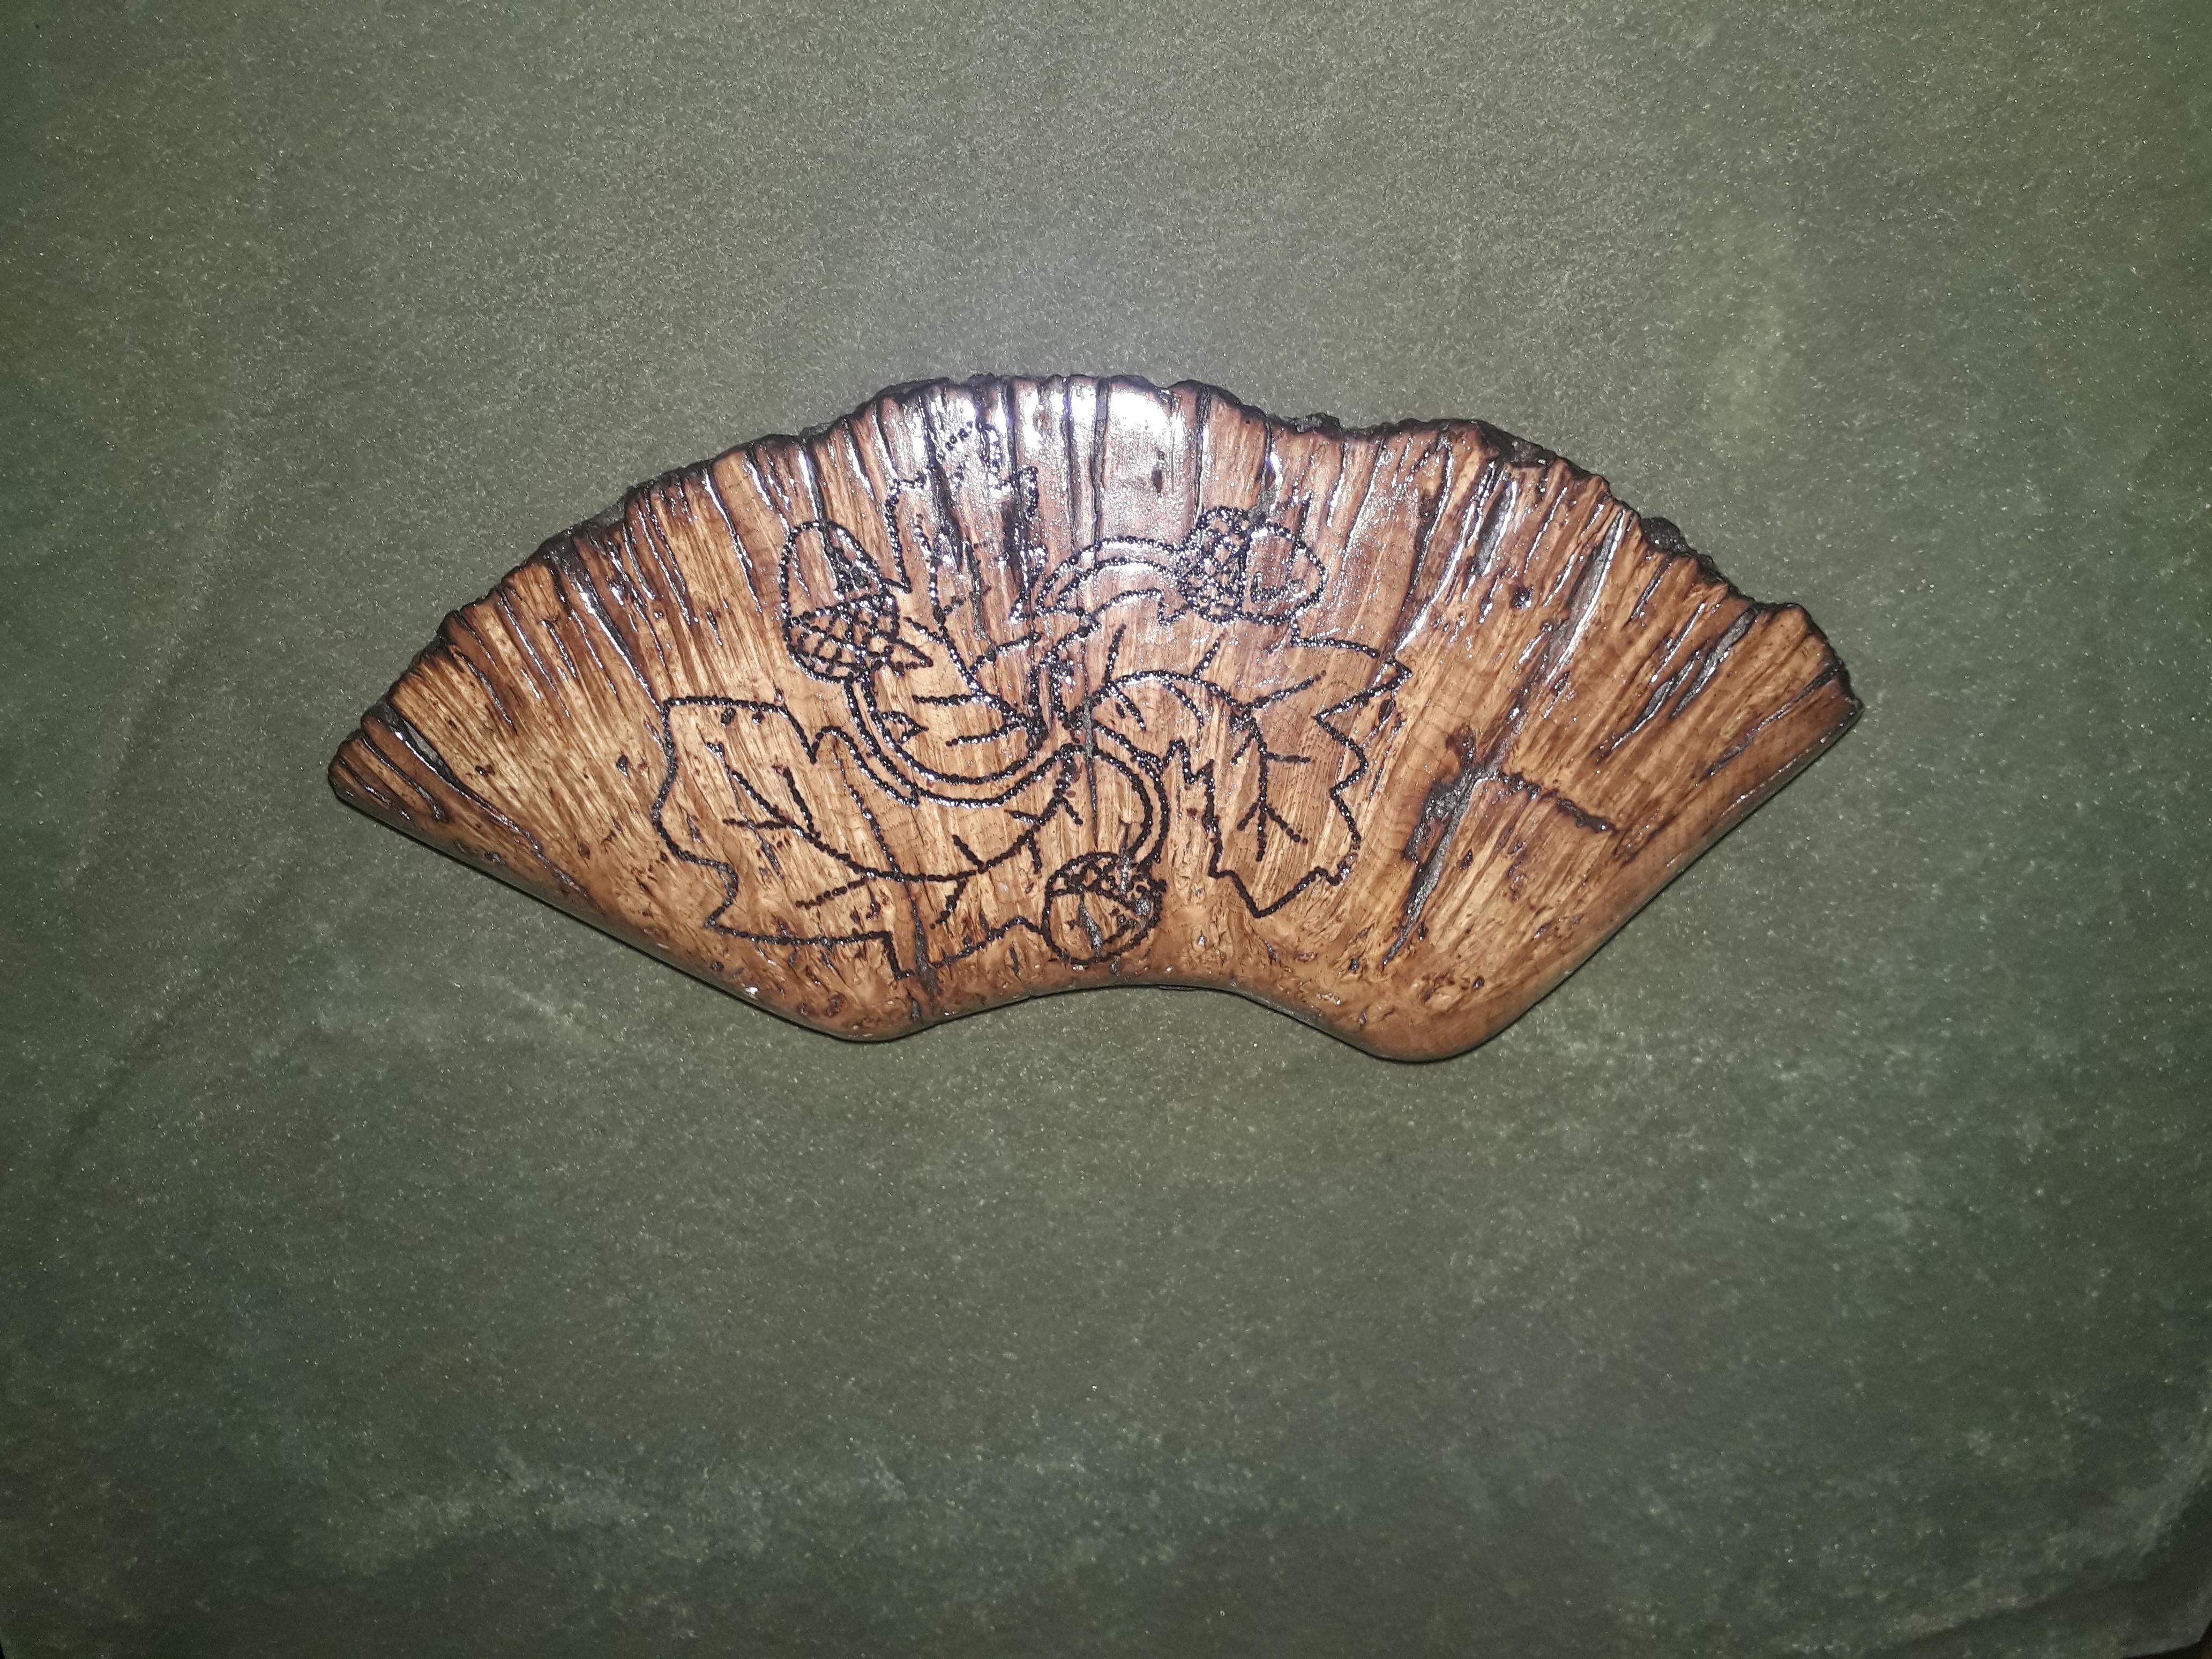 Oak leaf and acorn plaque